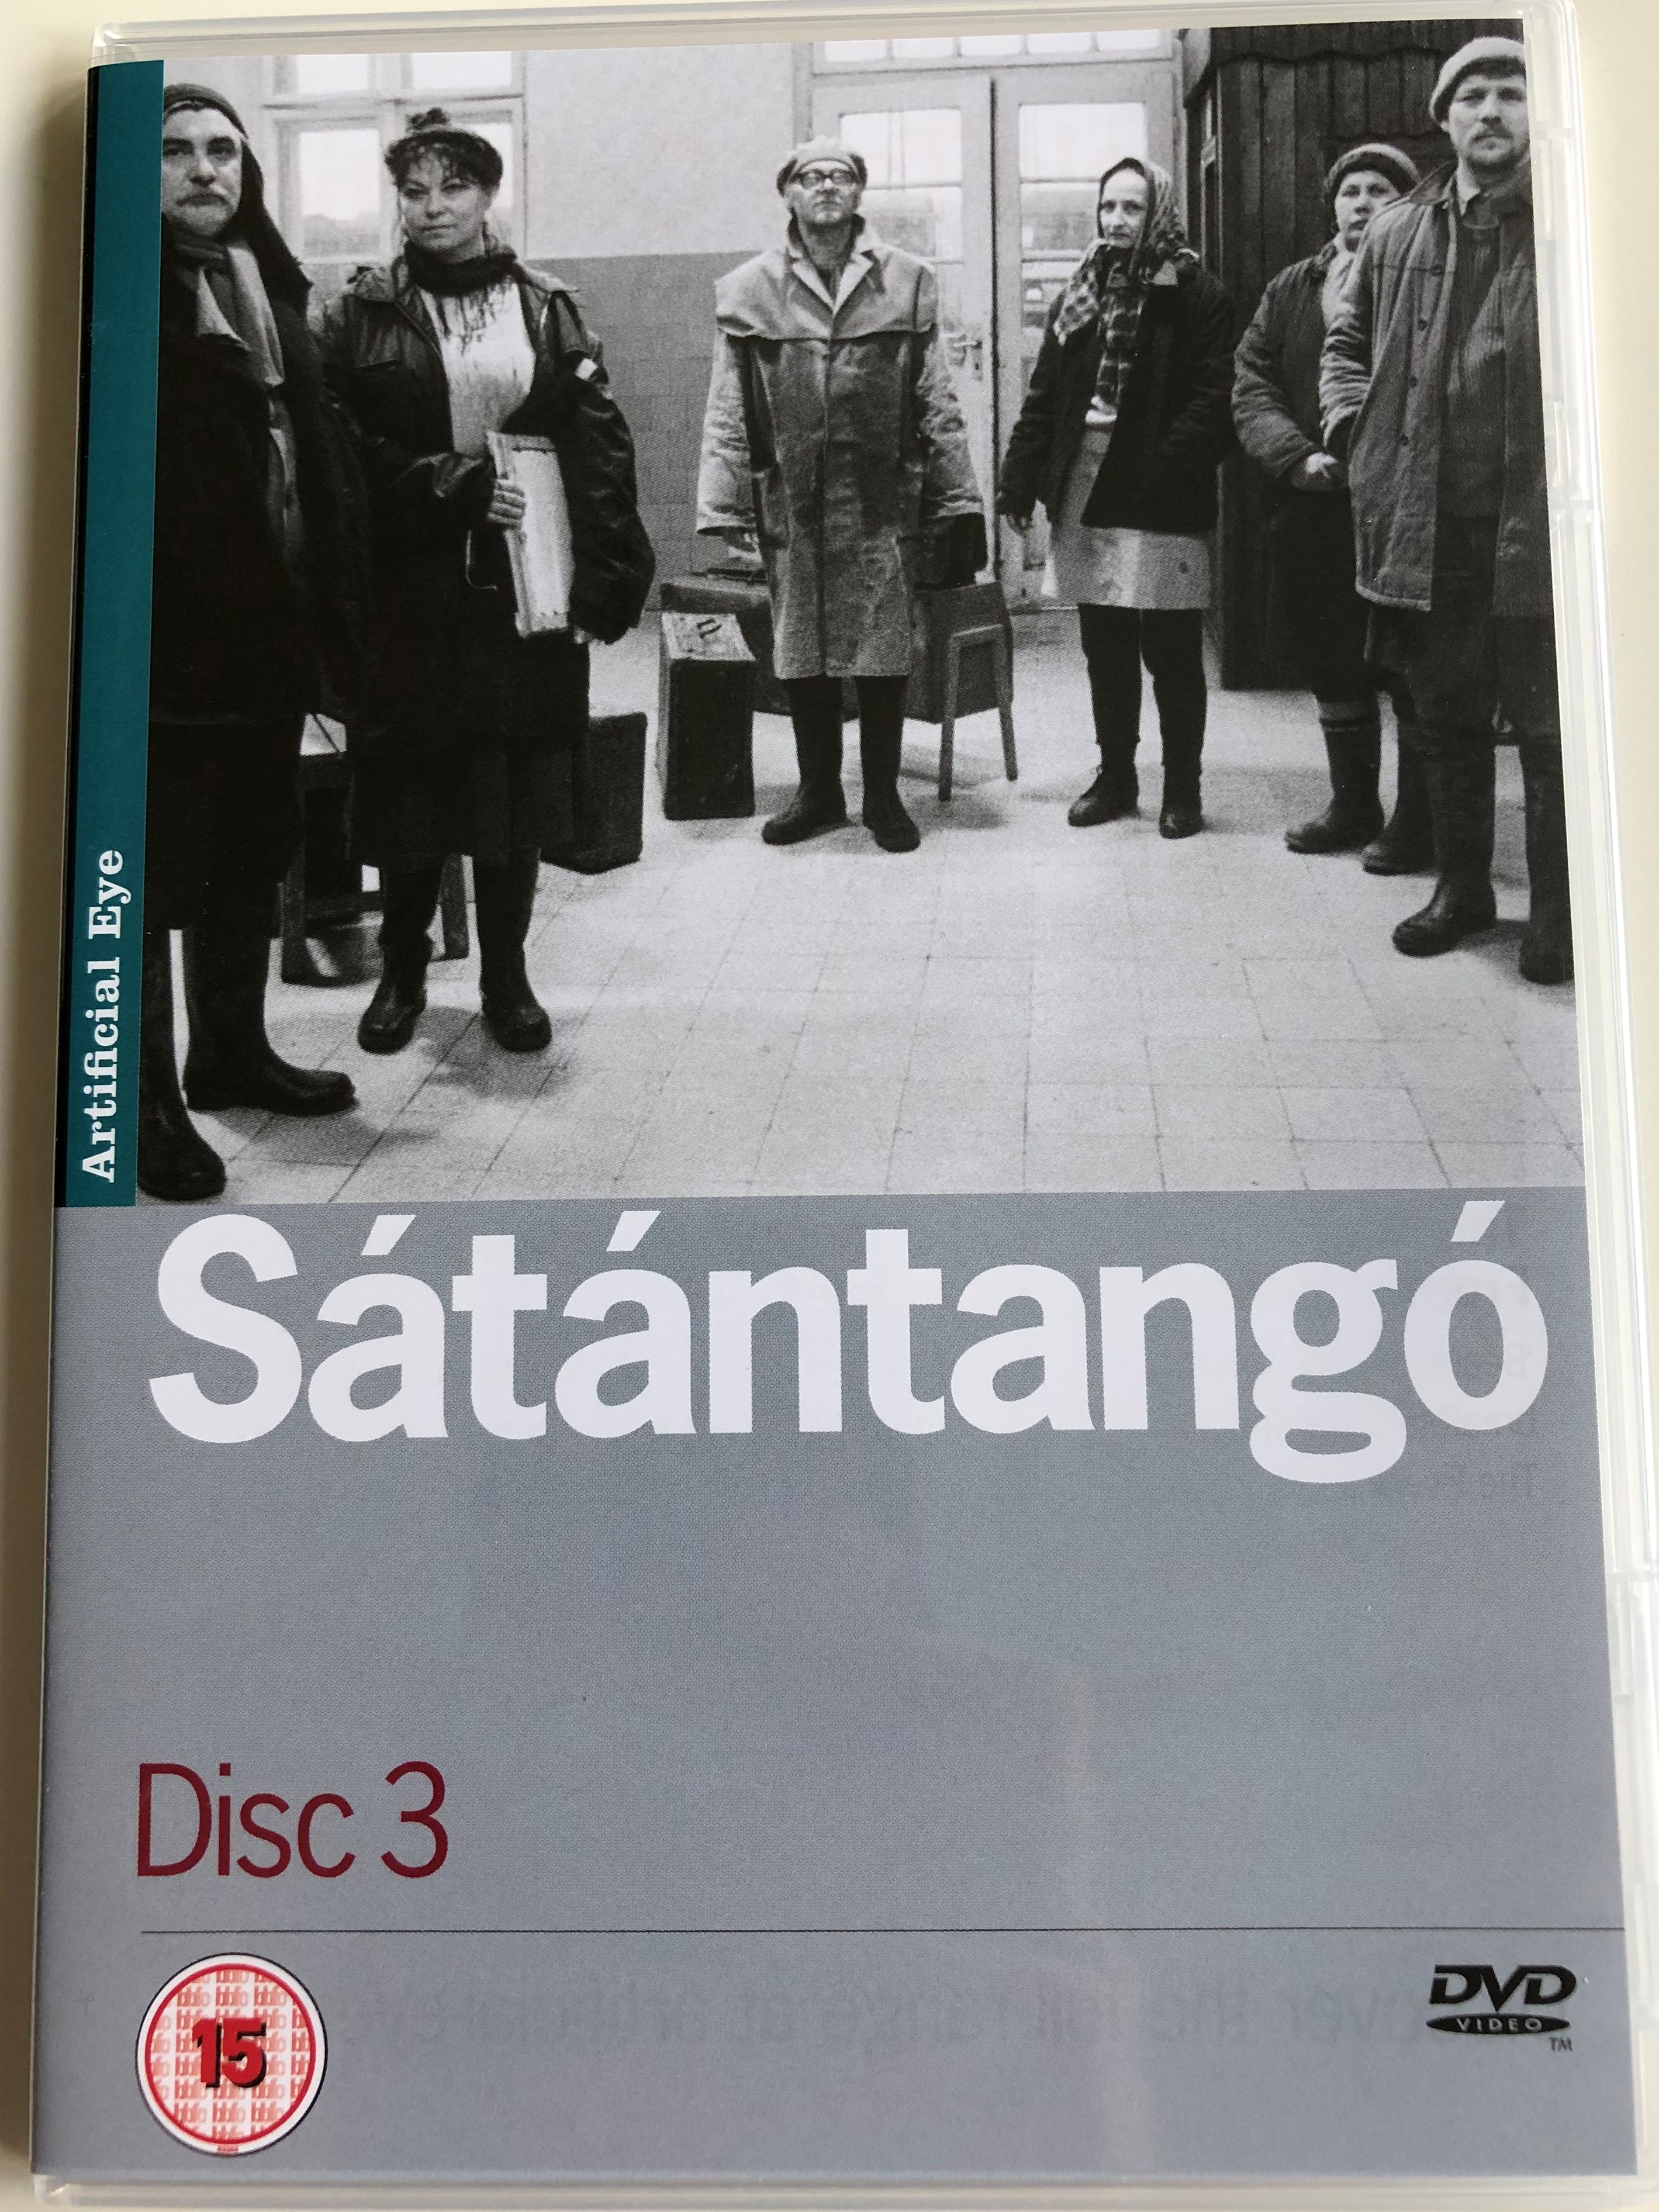 s-t-ntang-disc-3.-dvd-1994-satan-s-tango-directed-by-b-la-tarr-starring-mih-ly-v-g-putyi-horv-th-l-szl-lugossy-chapters-7-12-1-.jpg